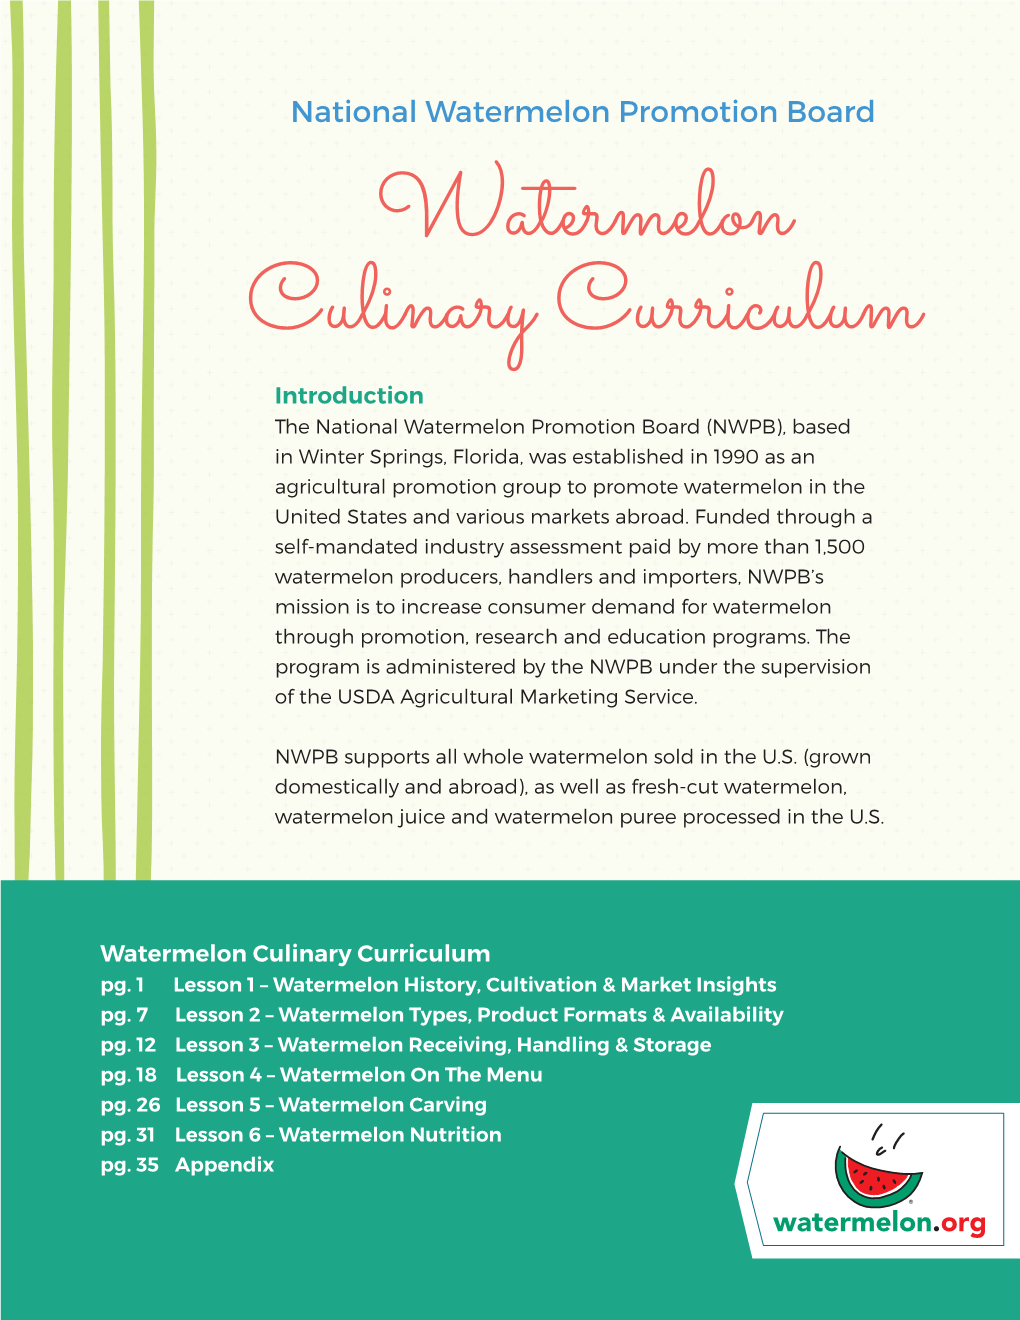 Watermelon Culinary Curriculum